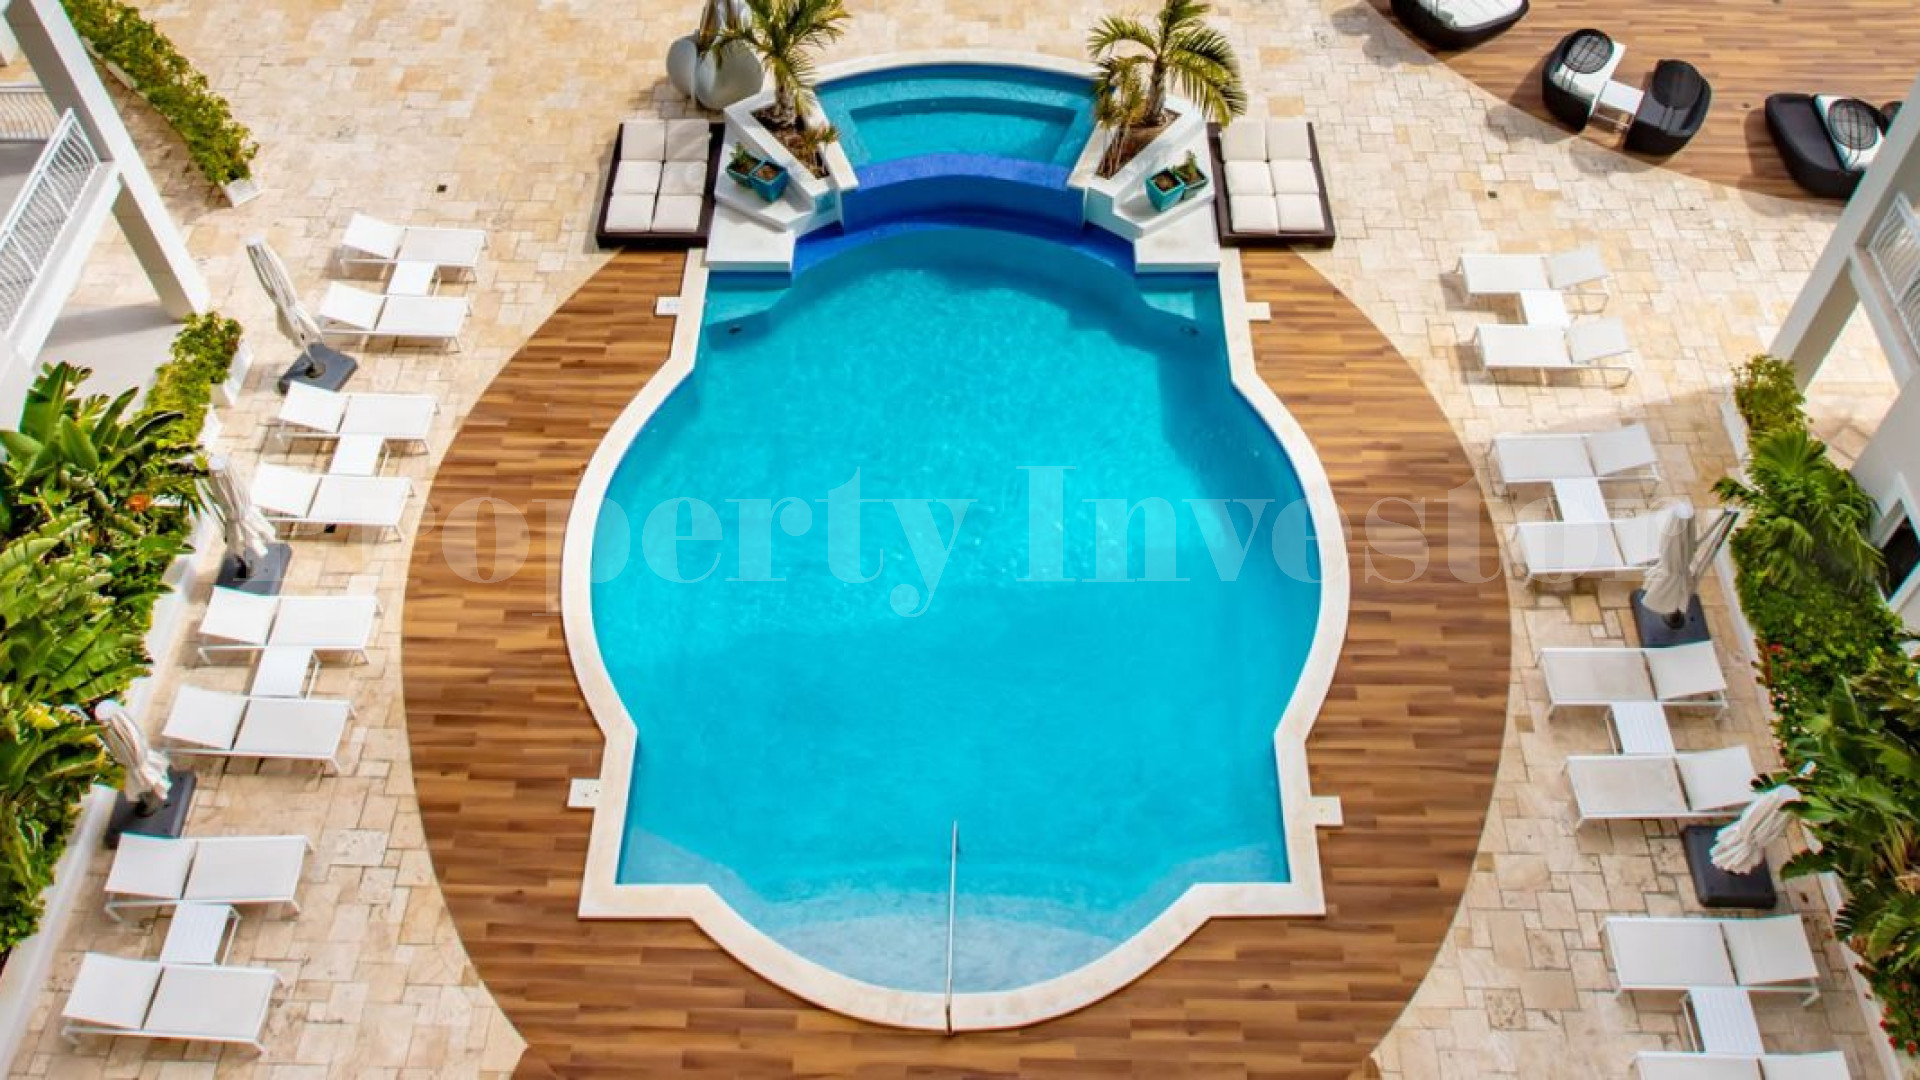 5 Bedroon Luxury Penthouse Condo on Paradise Island